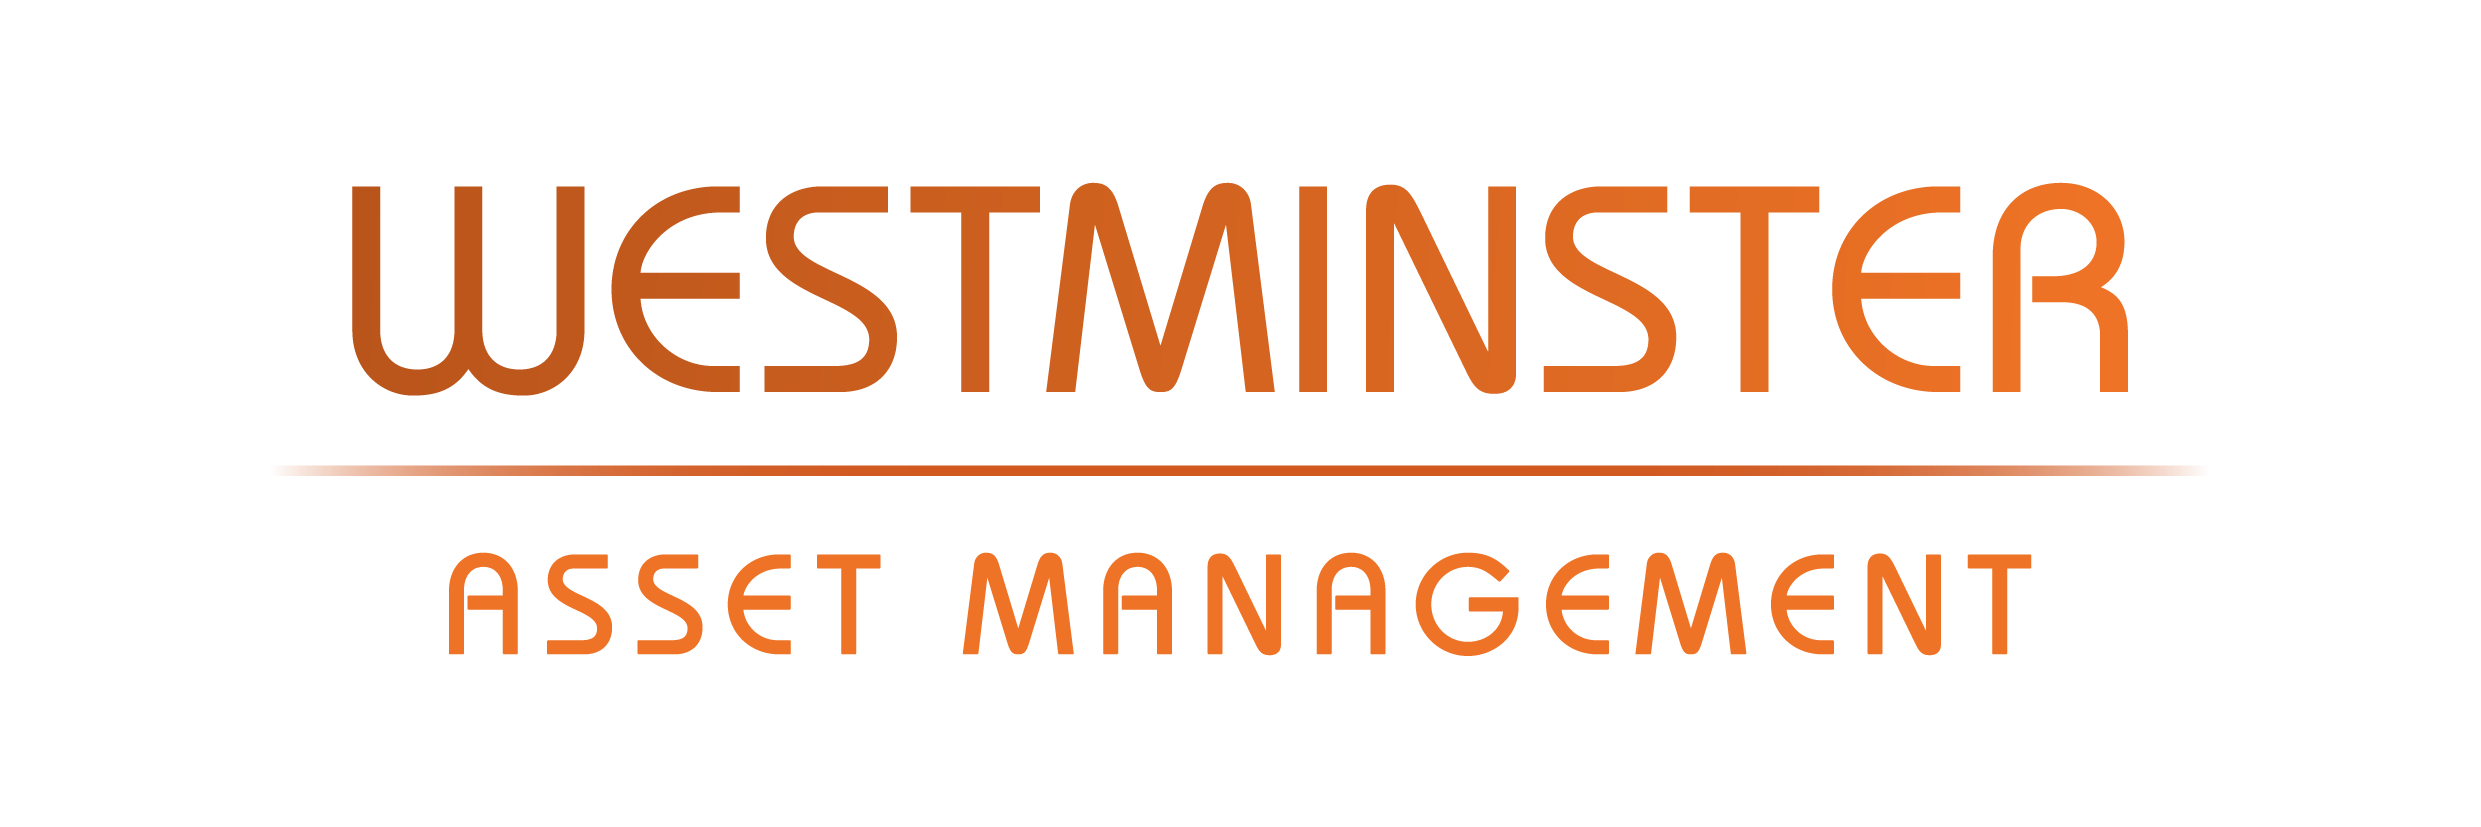 Westminster Asset Management 